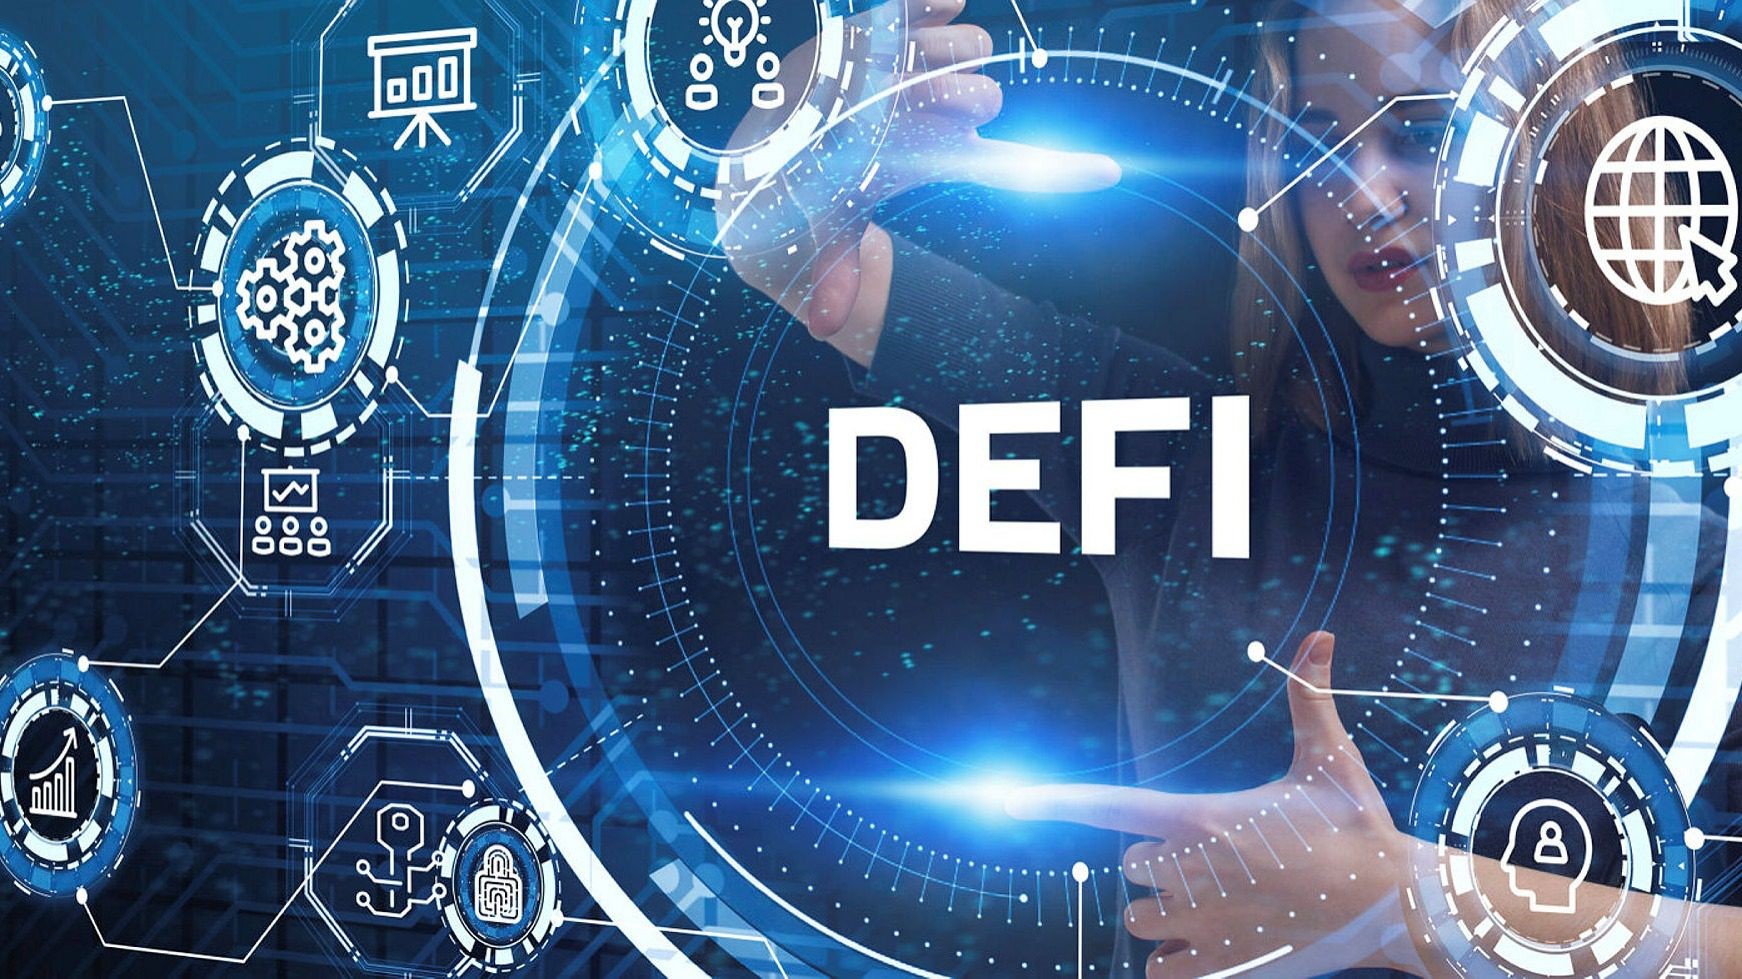 CeDeFi چیست و چرا اهمیت دارد؟